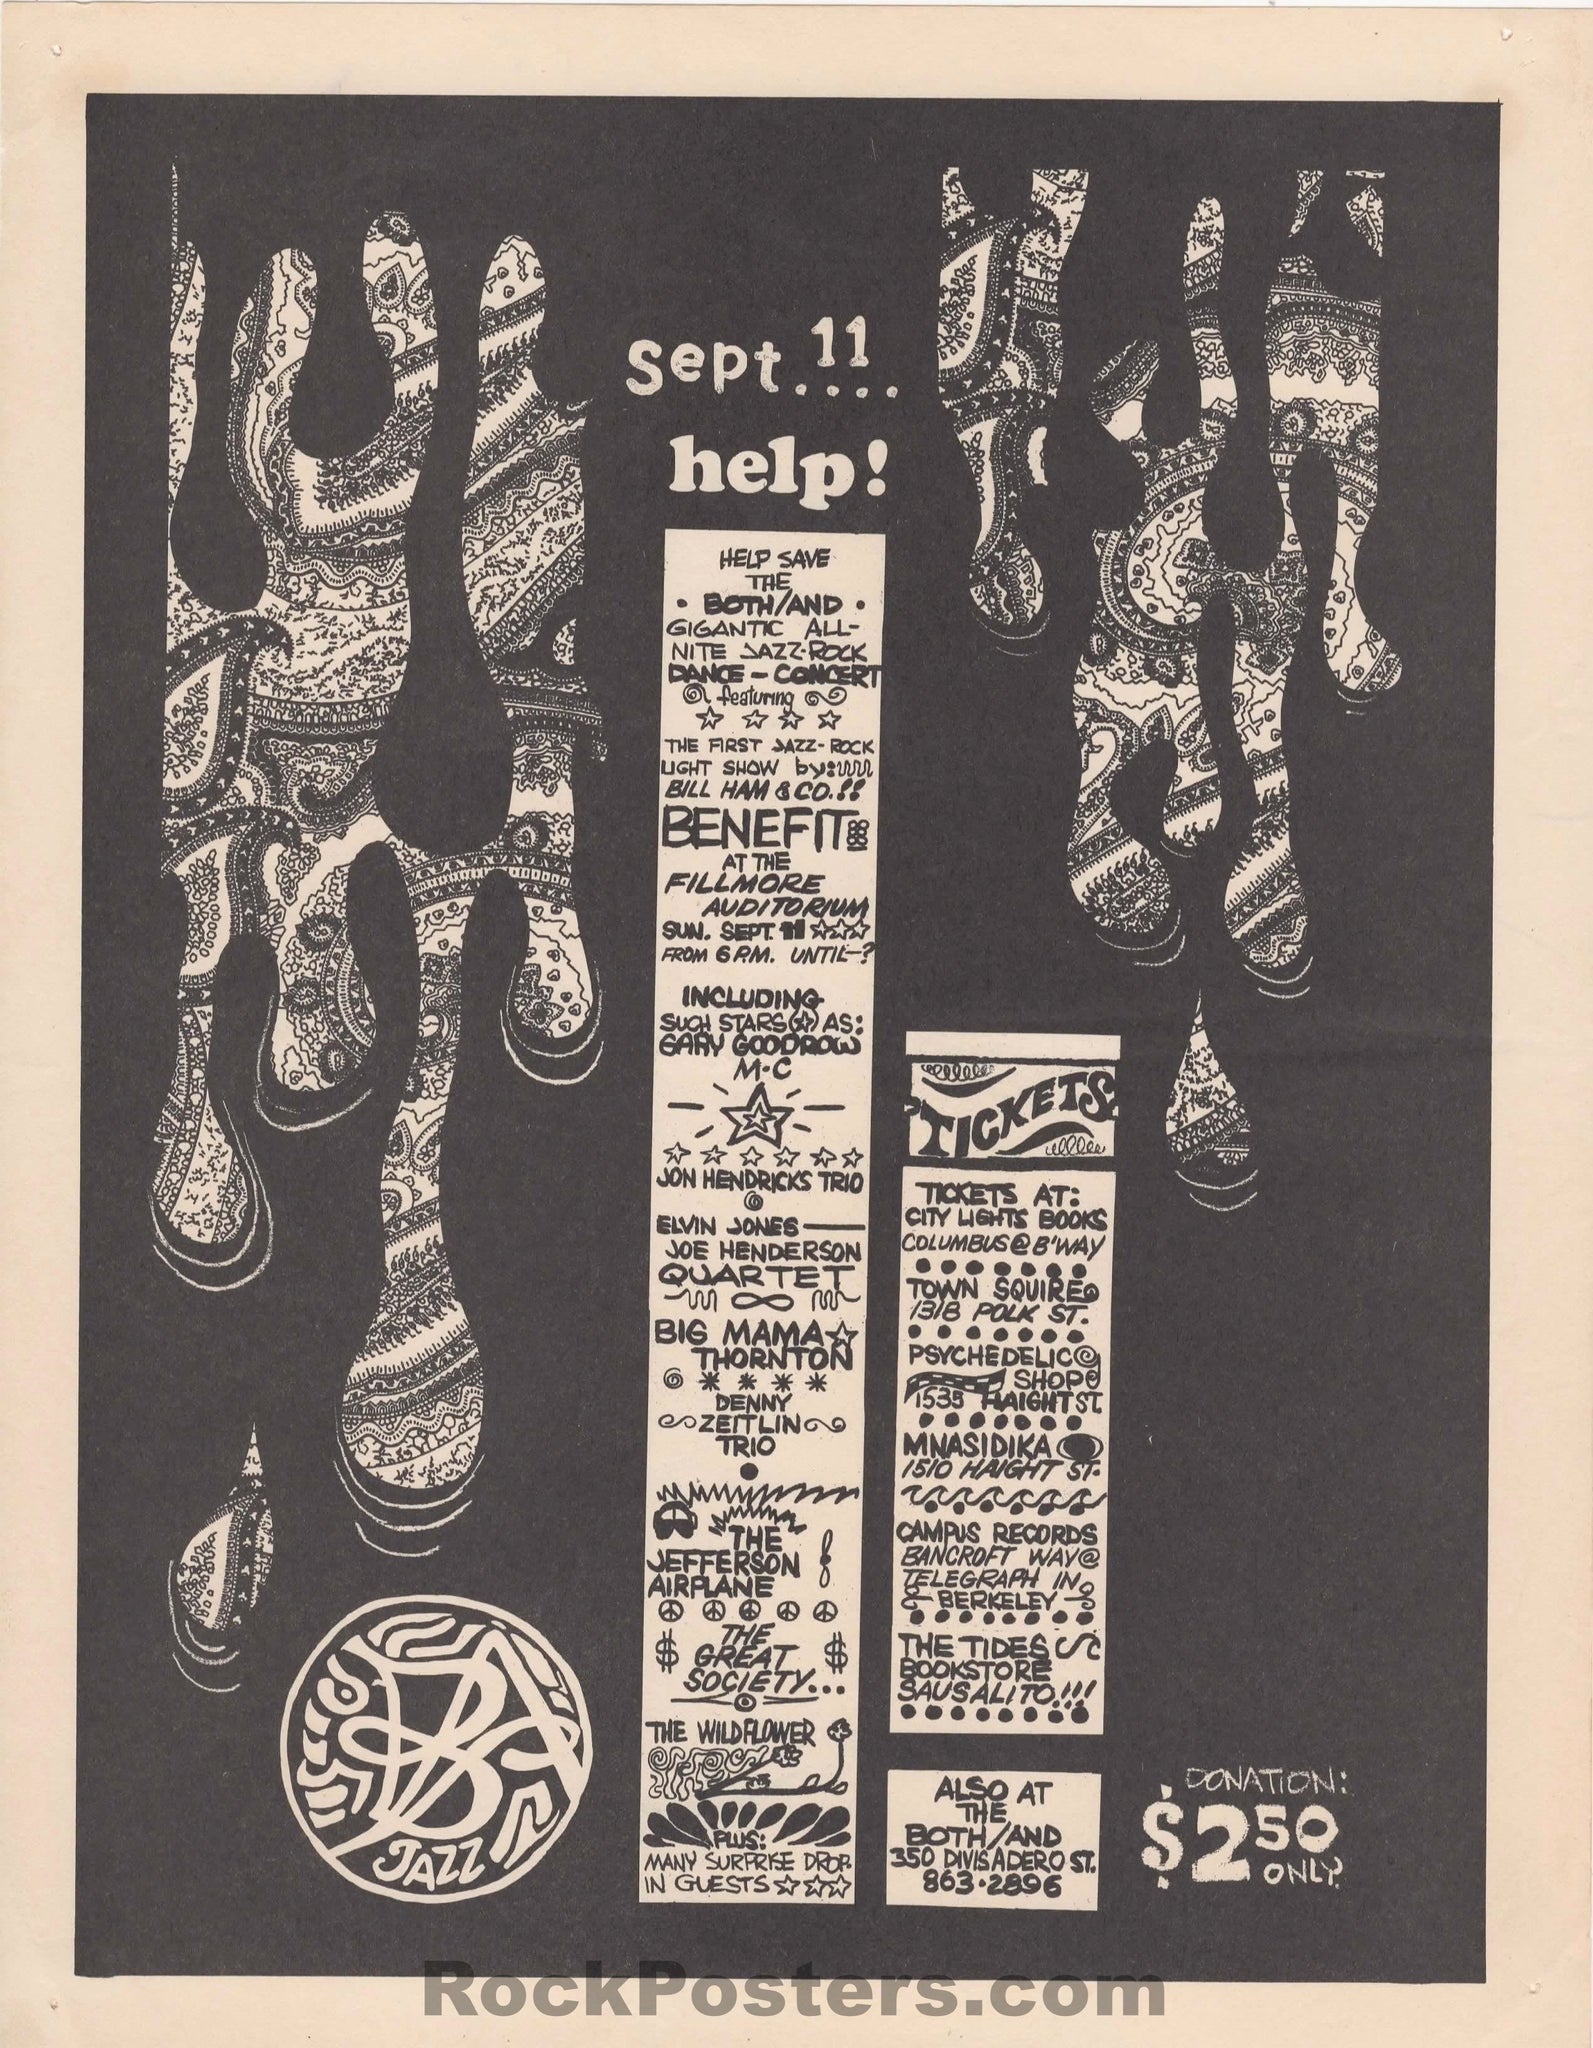 AUCTION - AOR 2.74 - Grateful  Dead -  Both/And Benefit - 1966 Handbill - Fillmore Auditorium - Excellent